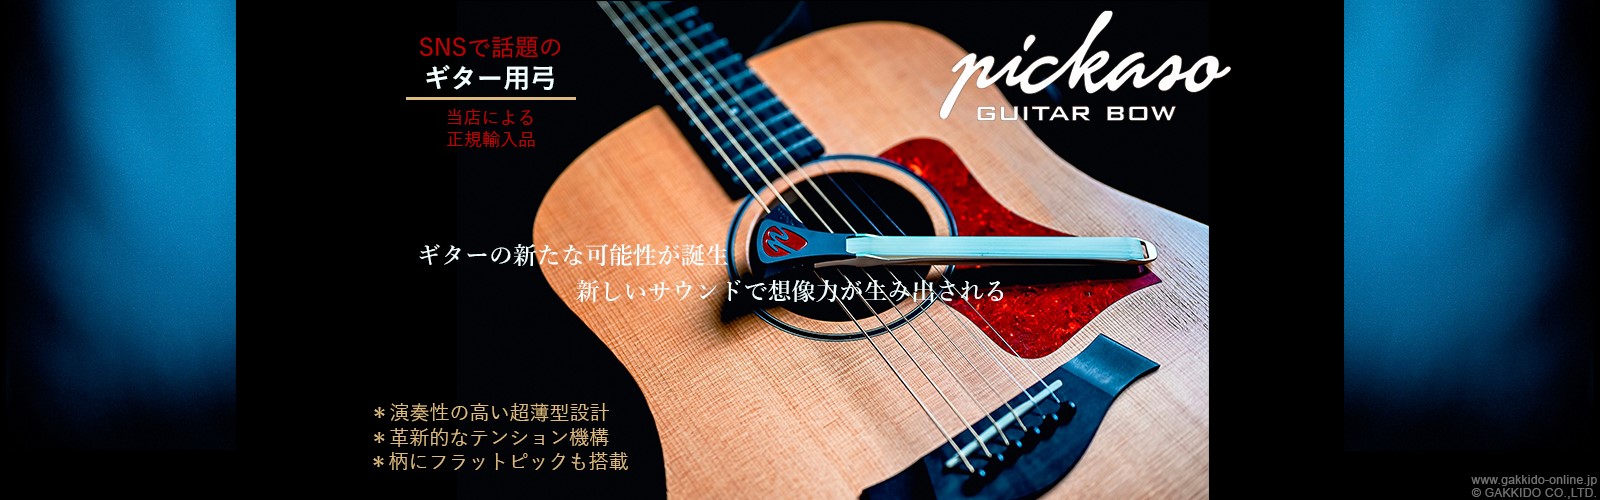 Pickaso Guitar Bow ピカソギターボウ (ギター用弓)